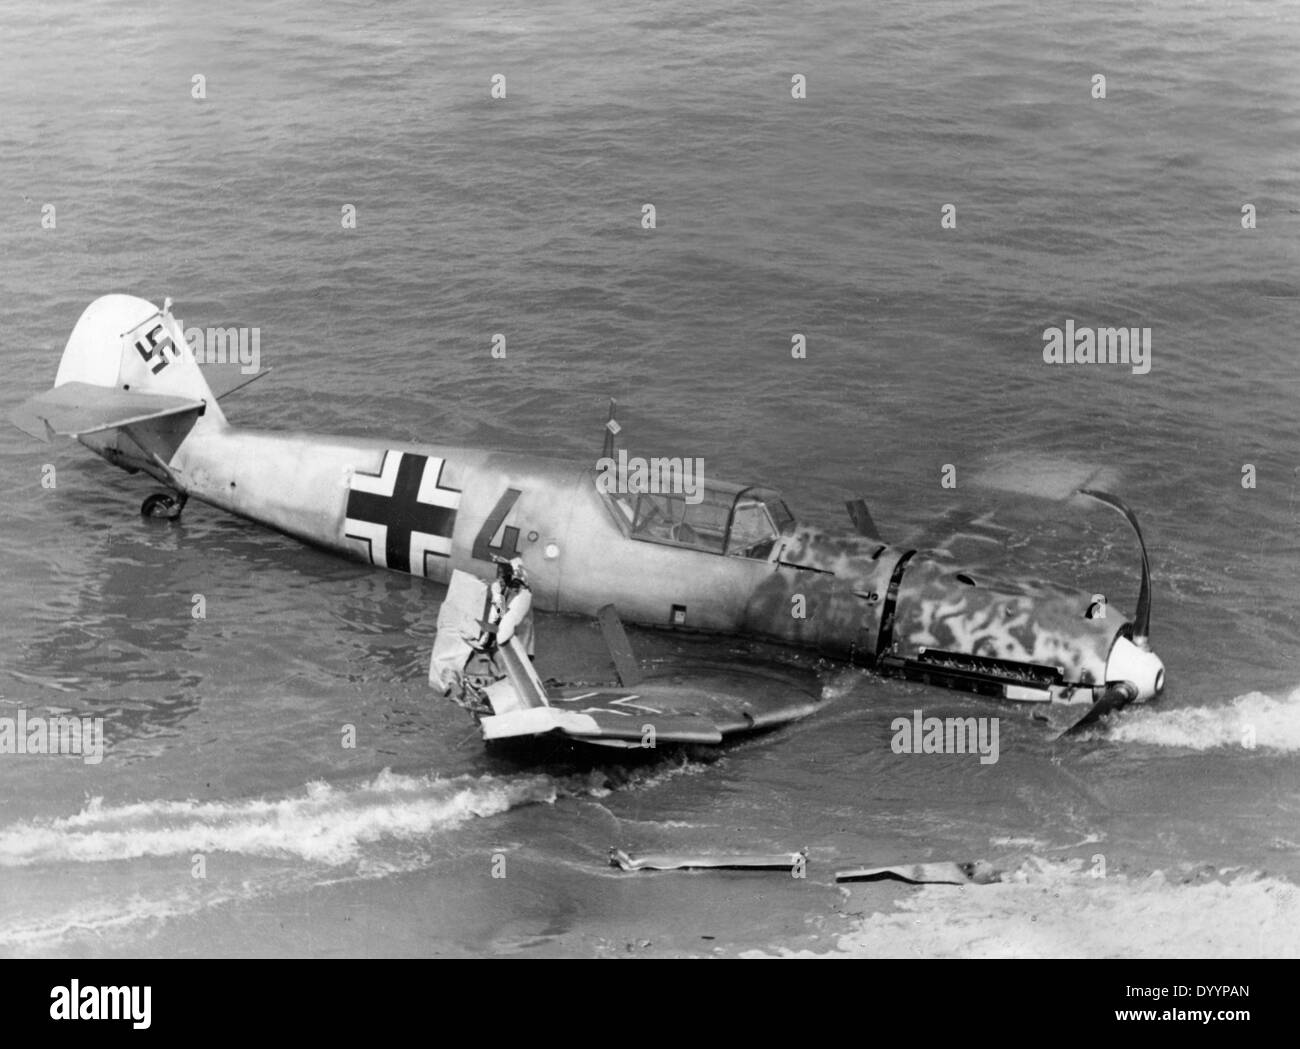 Luftschlacht um England: deutsche Flugzeuge, Maschine geschossen abgeschossen, Flugzeug zu retten, 1940 Messerschm abgeschossen Stockfoto